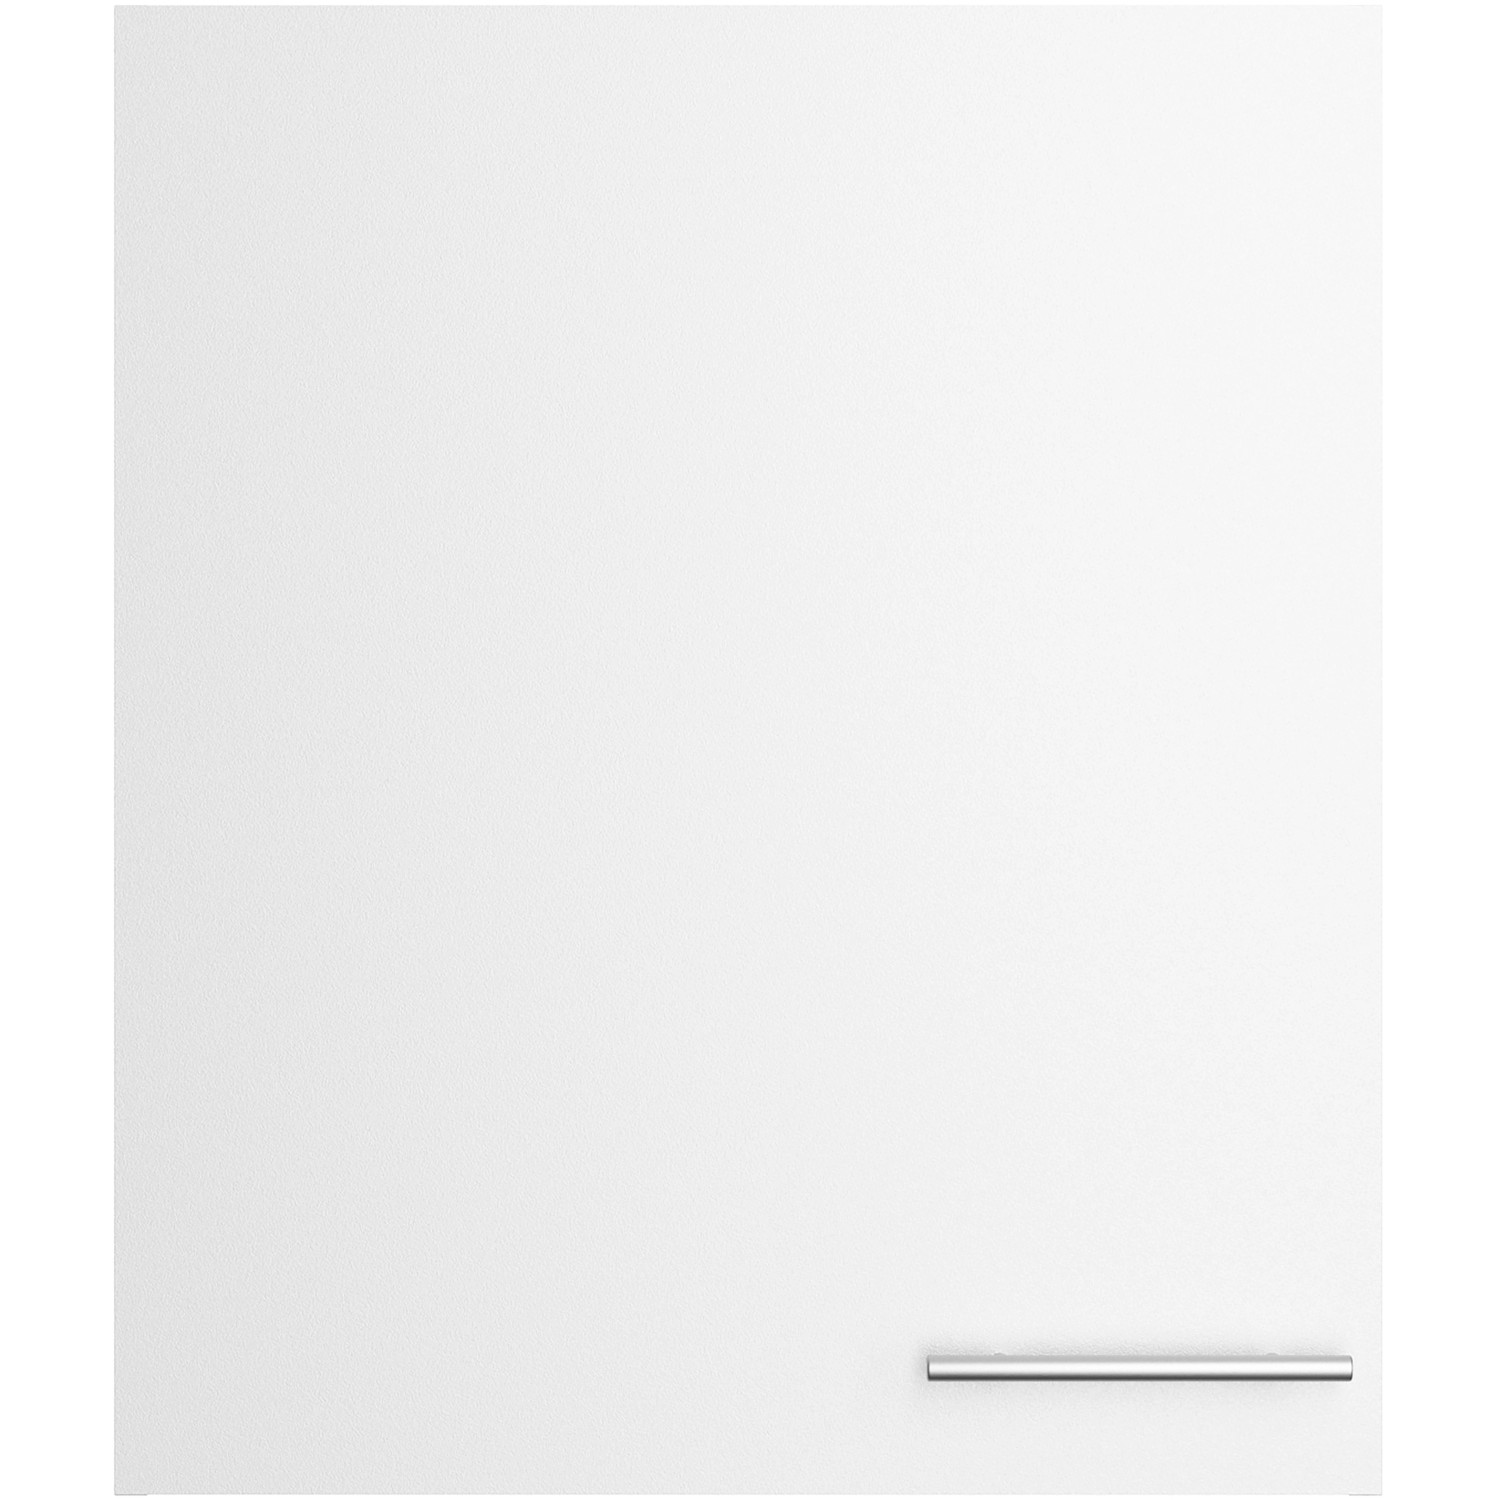 cm Oberschrank x cm bei Optifit Weiß x 70,4 OBI 34,9 kaufen Bengt932 60 cm